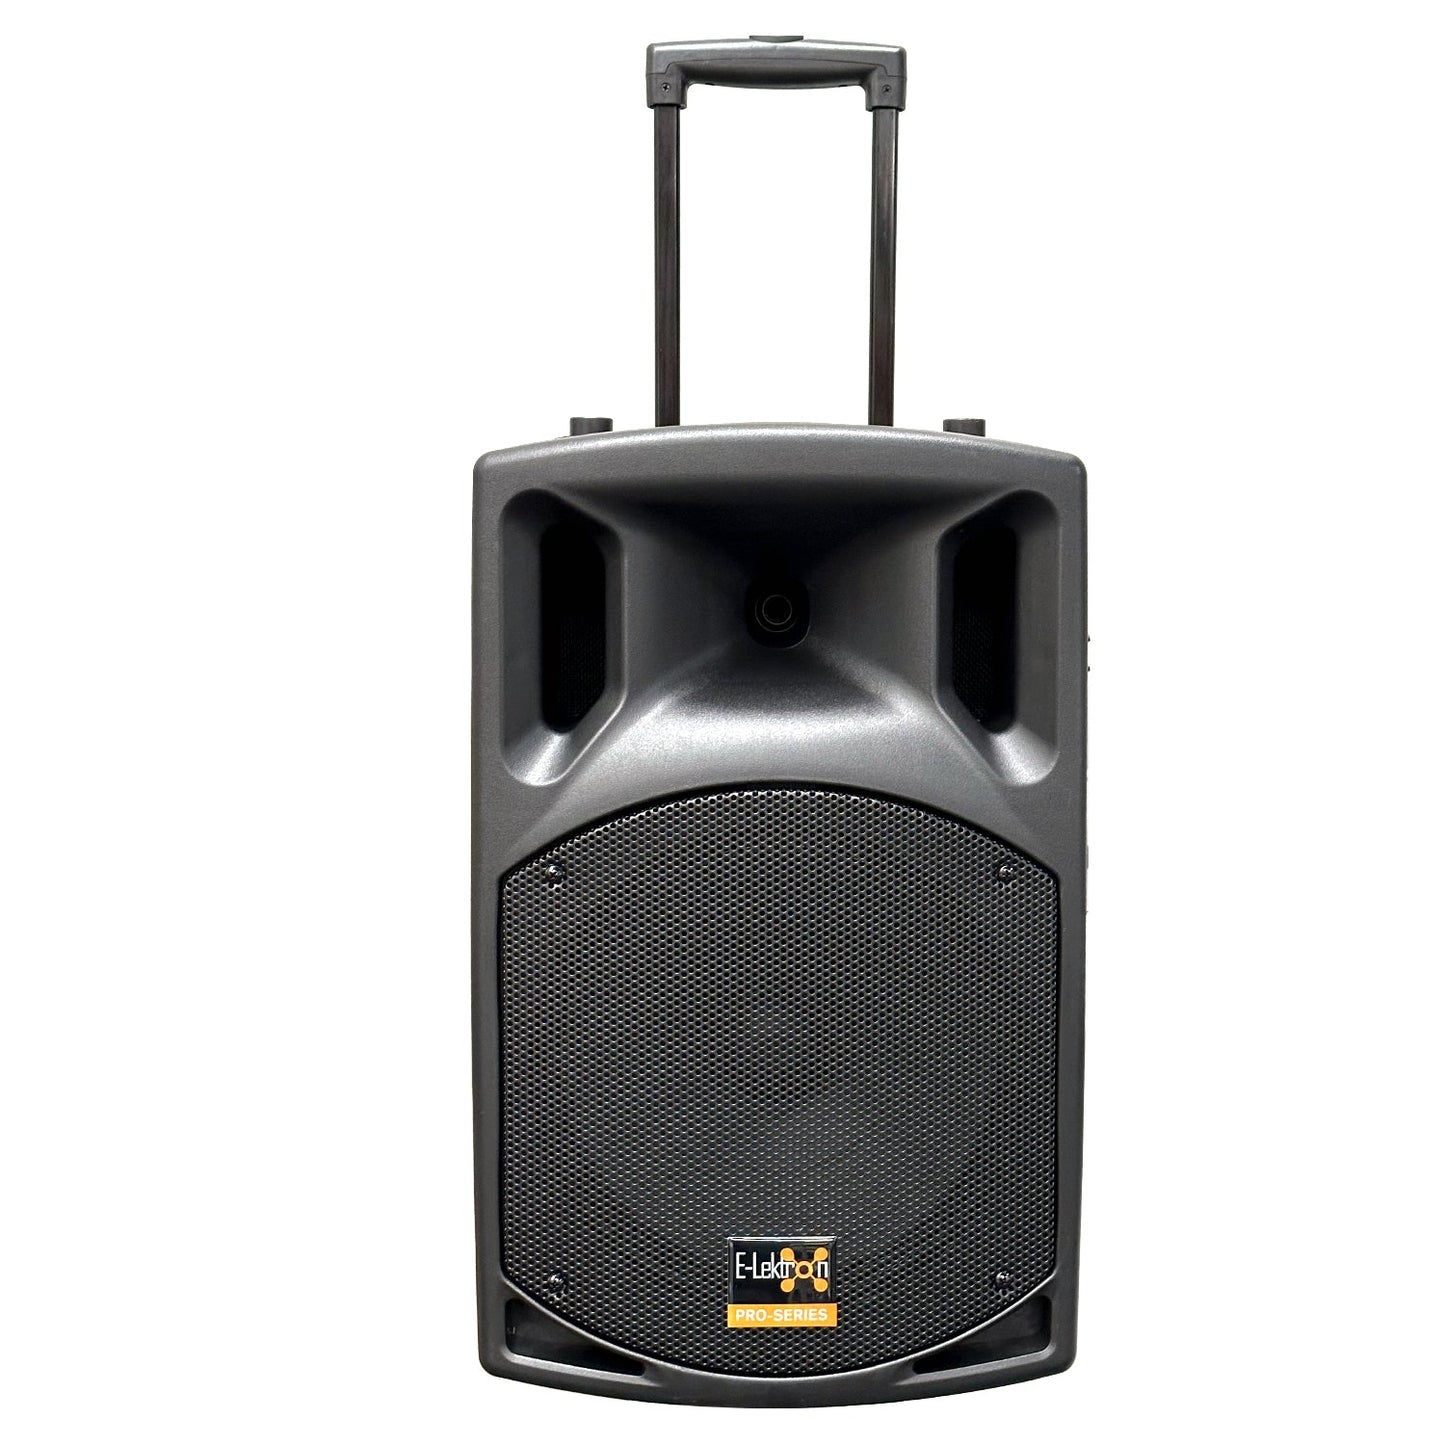 E-Lektron EL38-MU UHF 900W 15" inch Bluetooth Wireless linkable Loud Portable PA Speaker Sound System Recoding incl.2 Mics for Karaoke Party Event Speech Singing